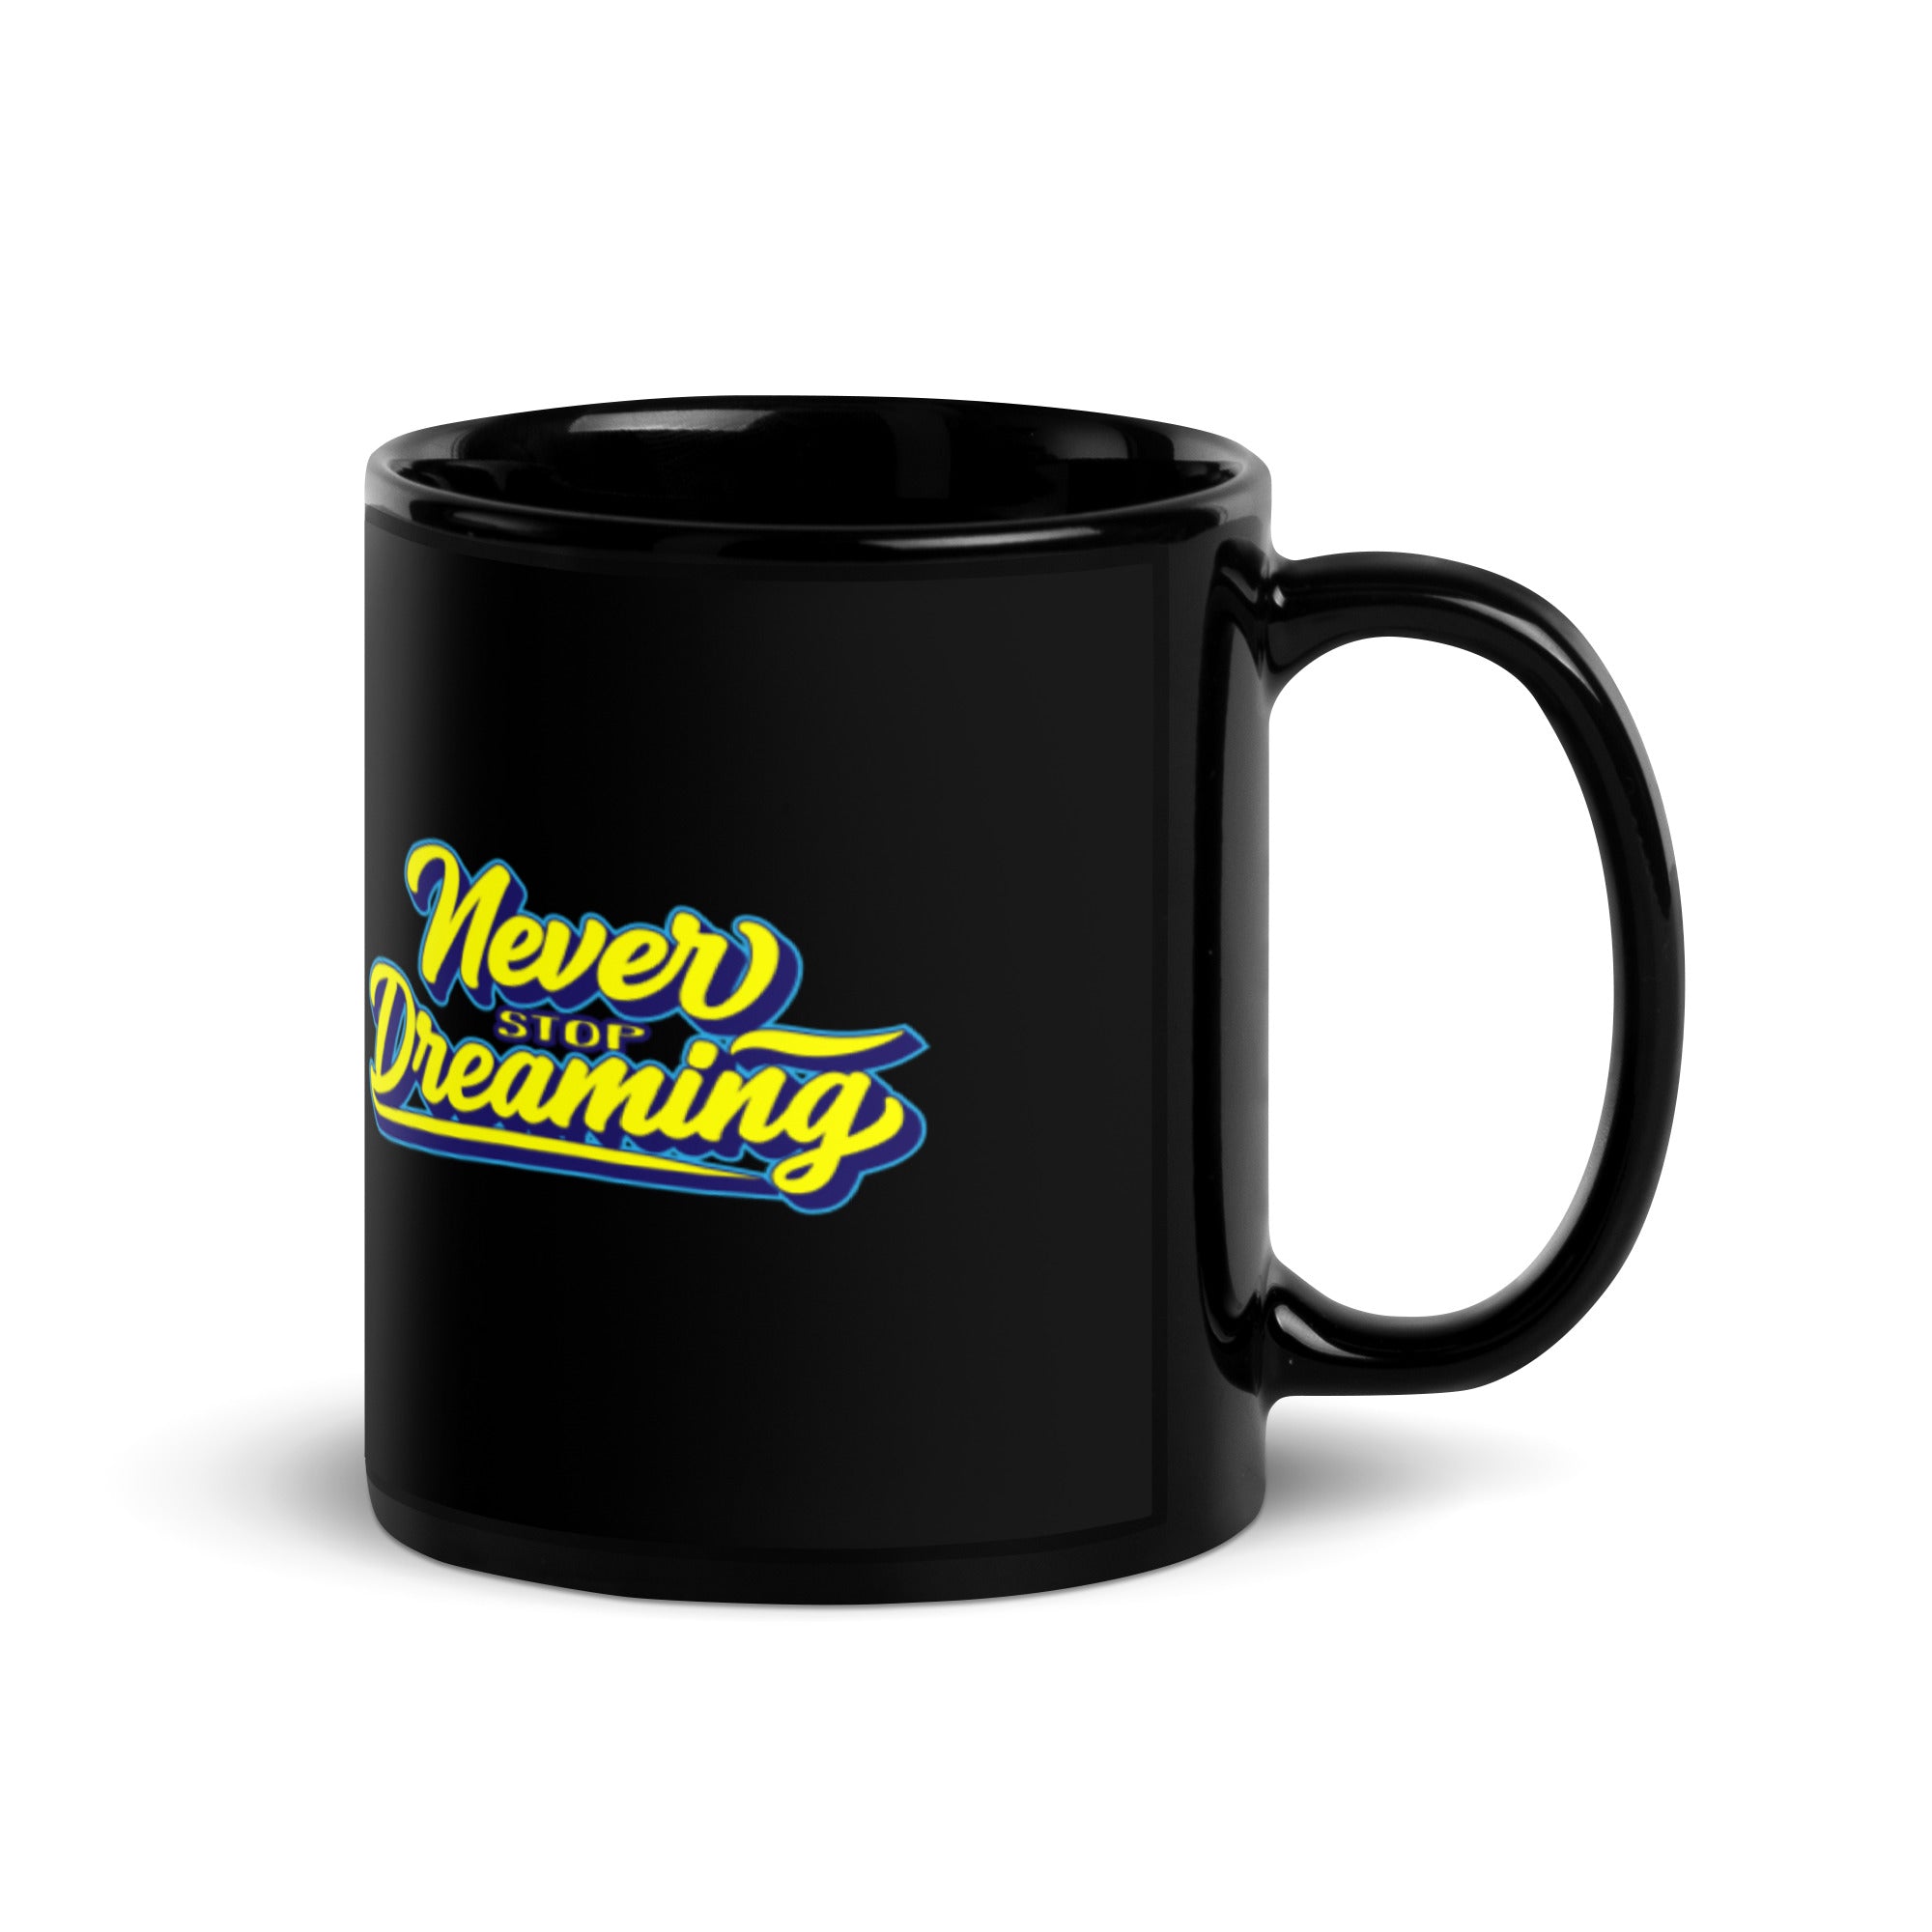 Never Stop Dreaming - Black Glossy Mug